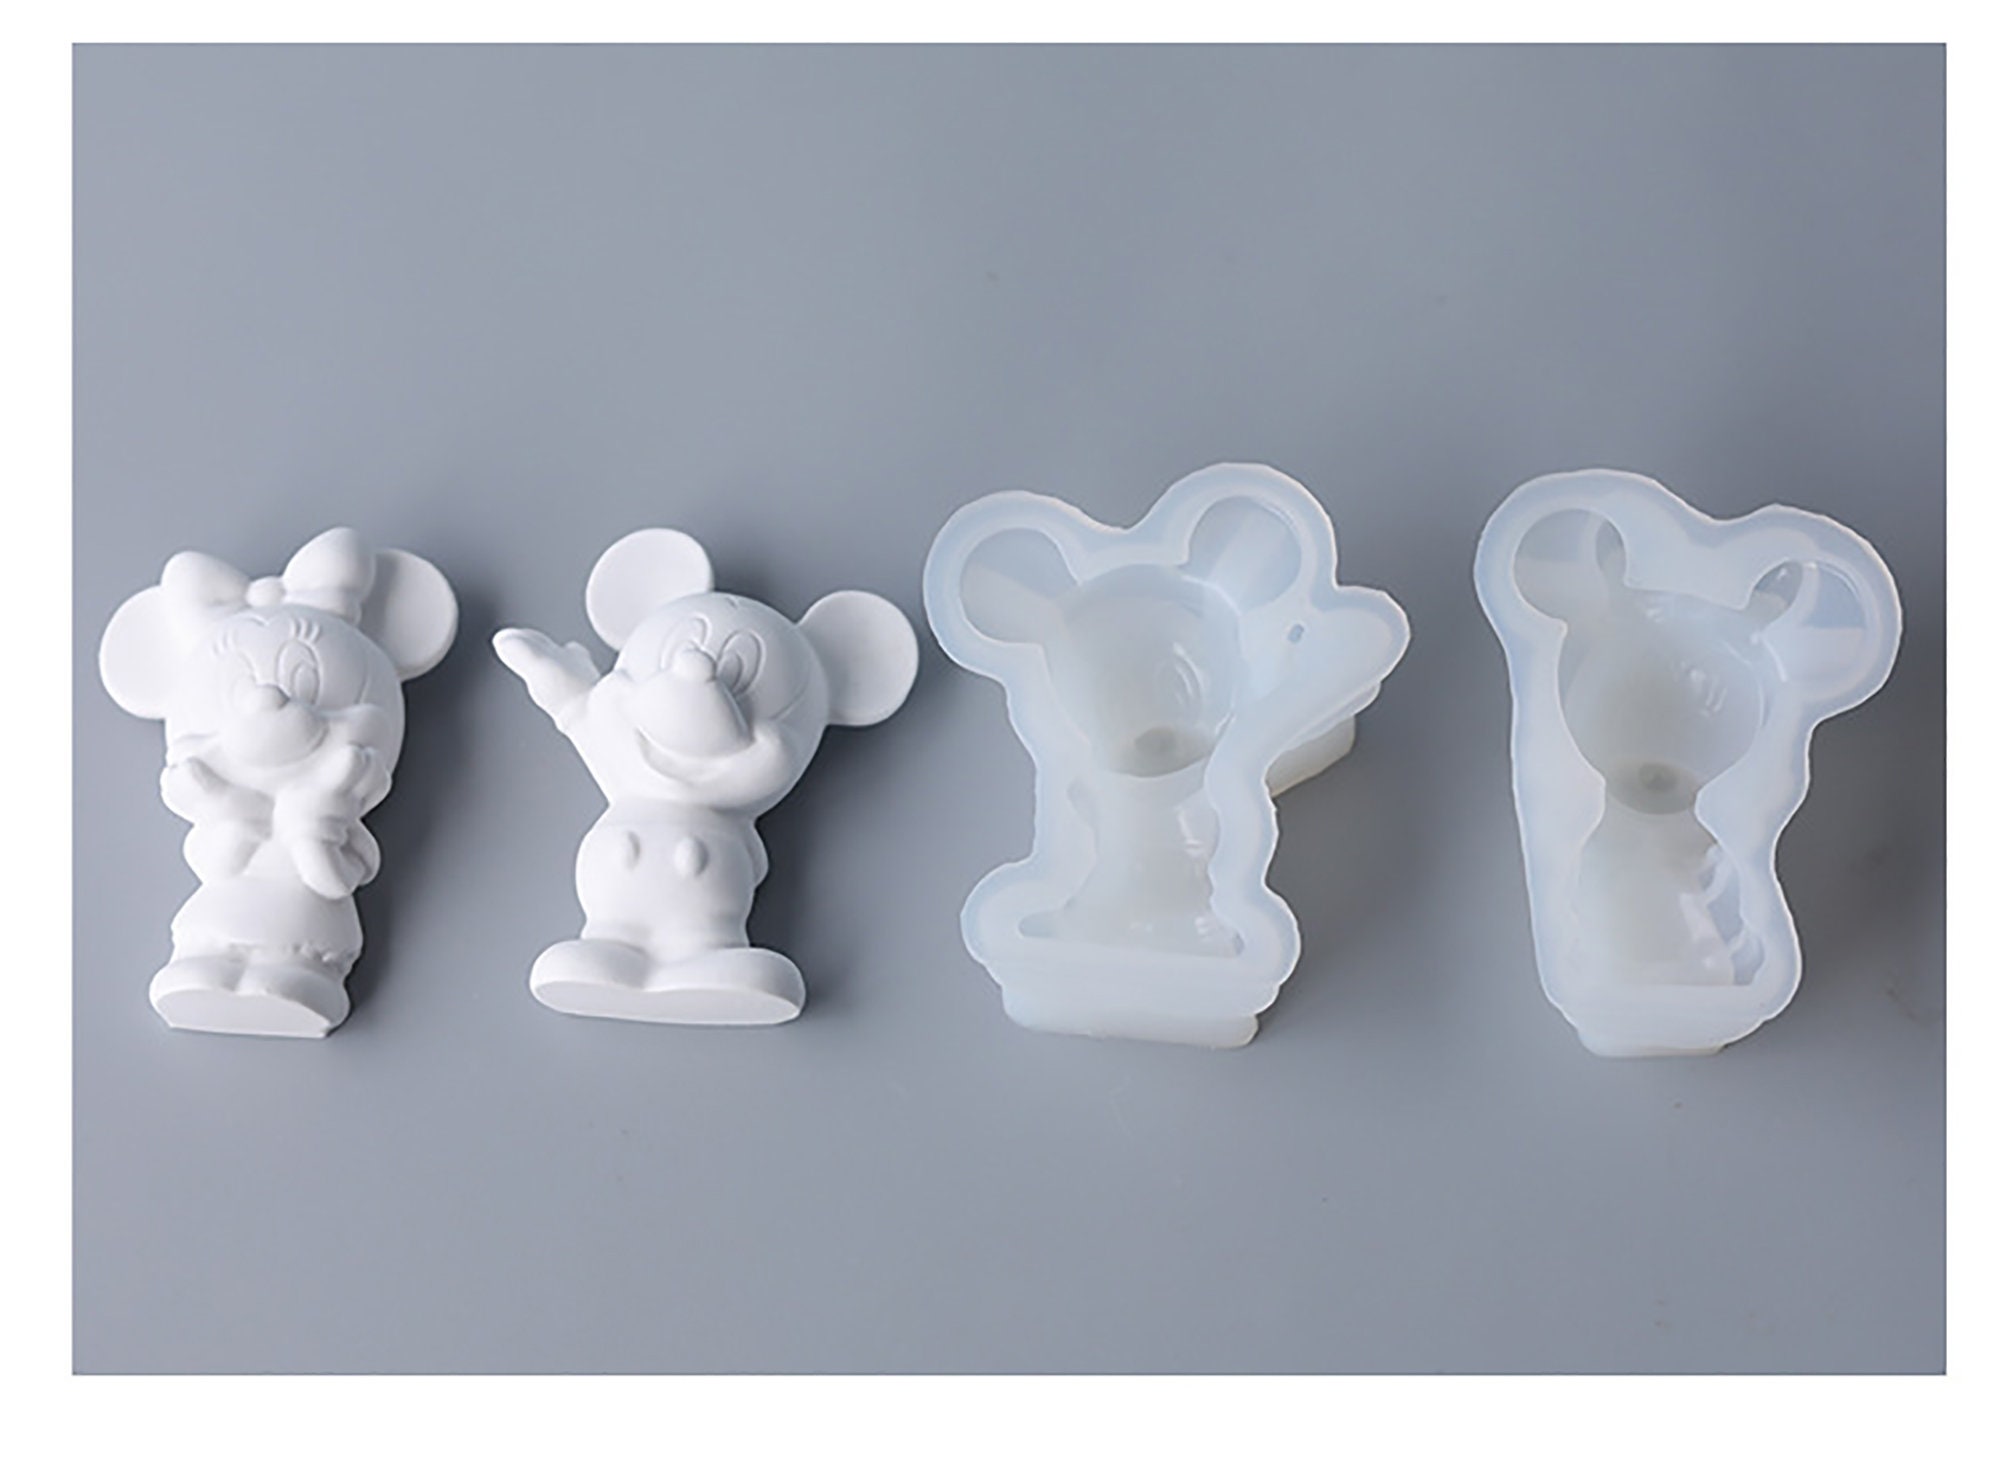 Disney Kingdom Hearts Dice Rolling Tray Mold, Disney Silicone Molds, Disney Food Grade Molds, Resin Craft Molds, Dice Rolling Tray Molds